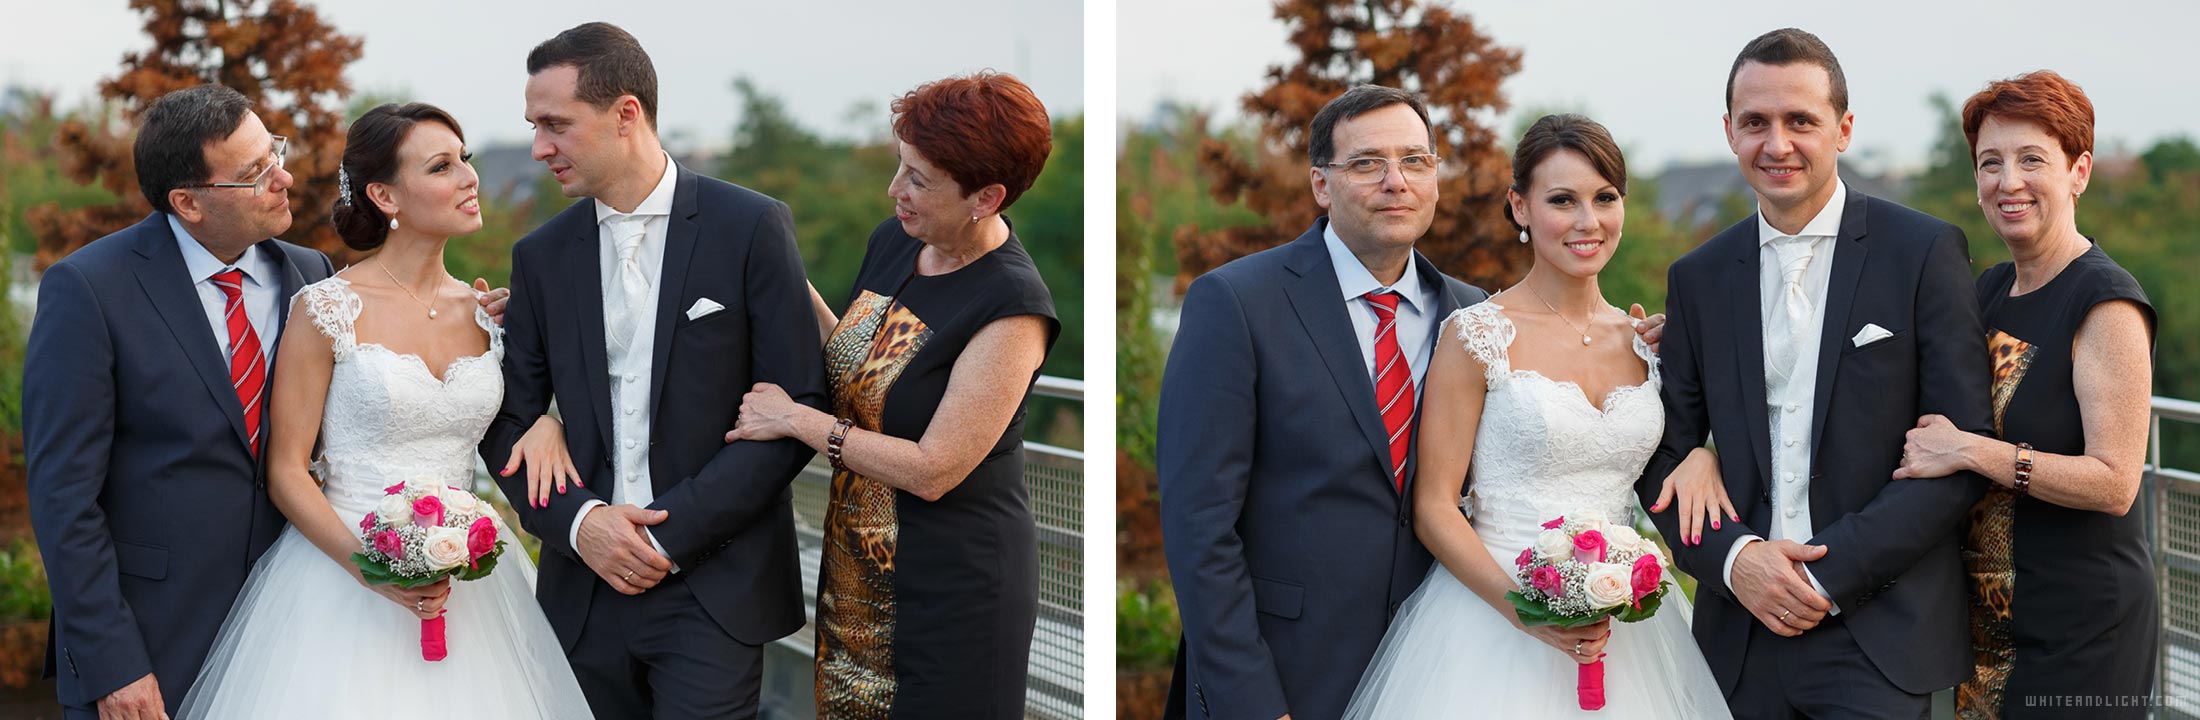 Professional photographer Munich- wedding budget